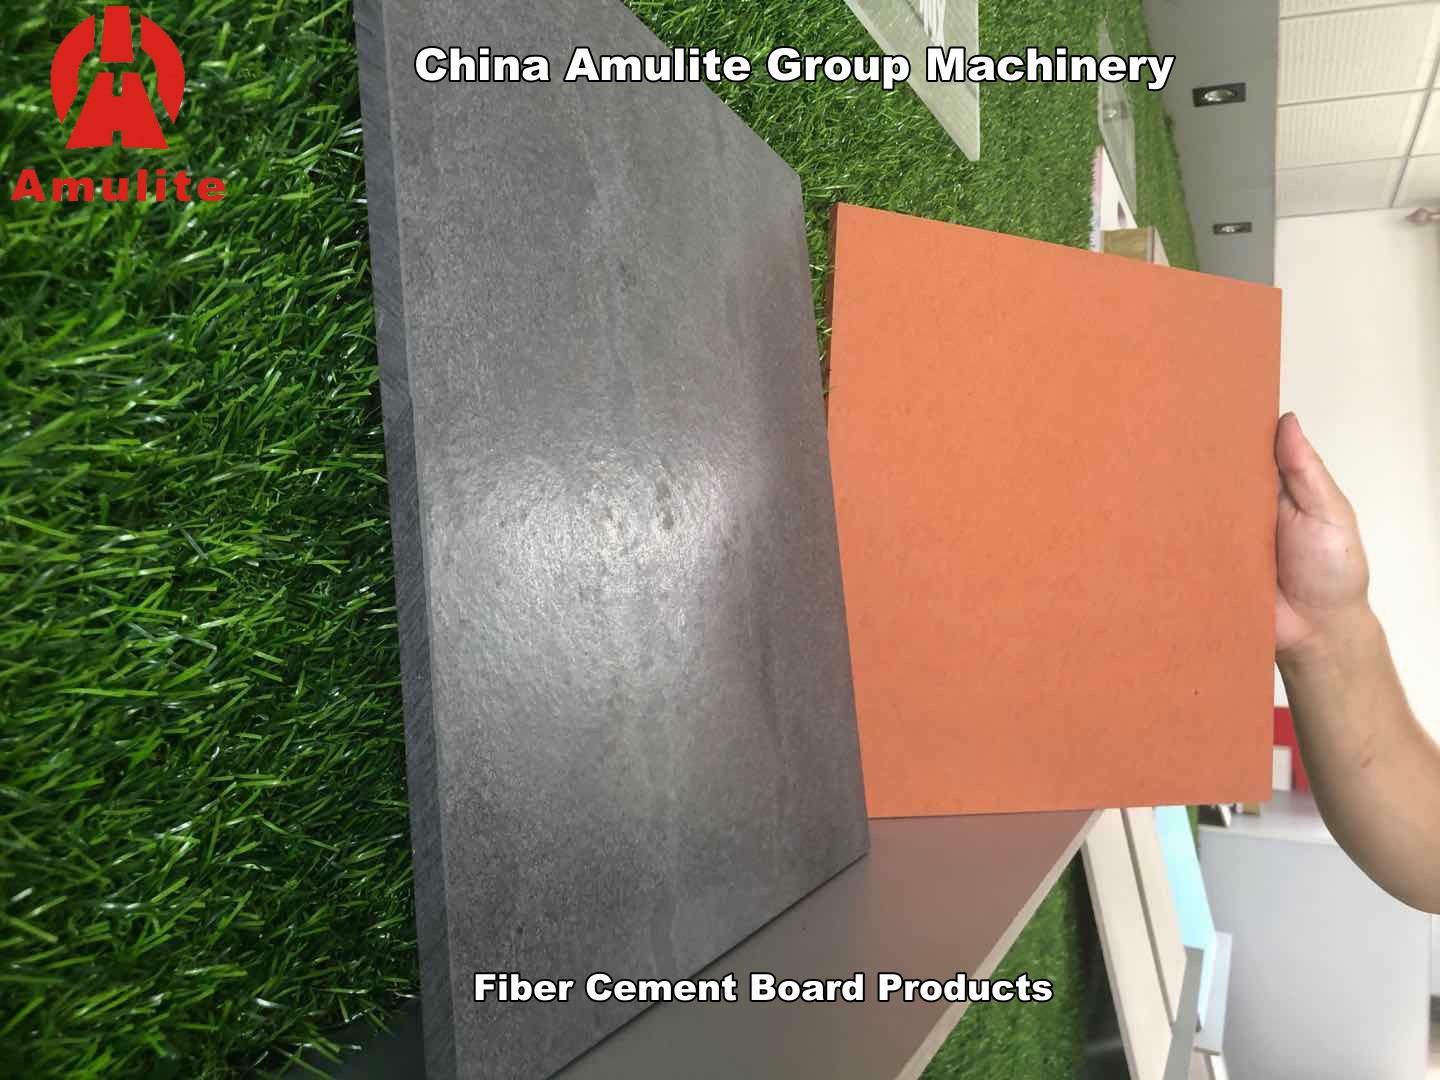 Fiber Cement Board Products (29)